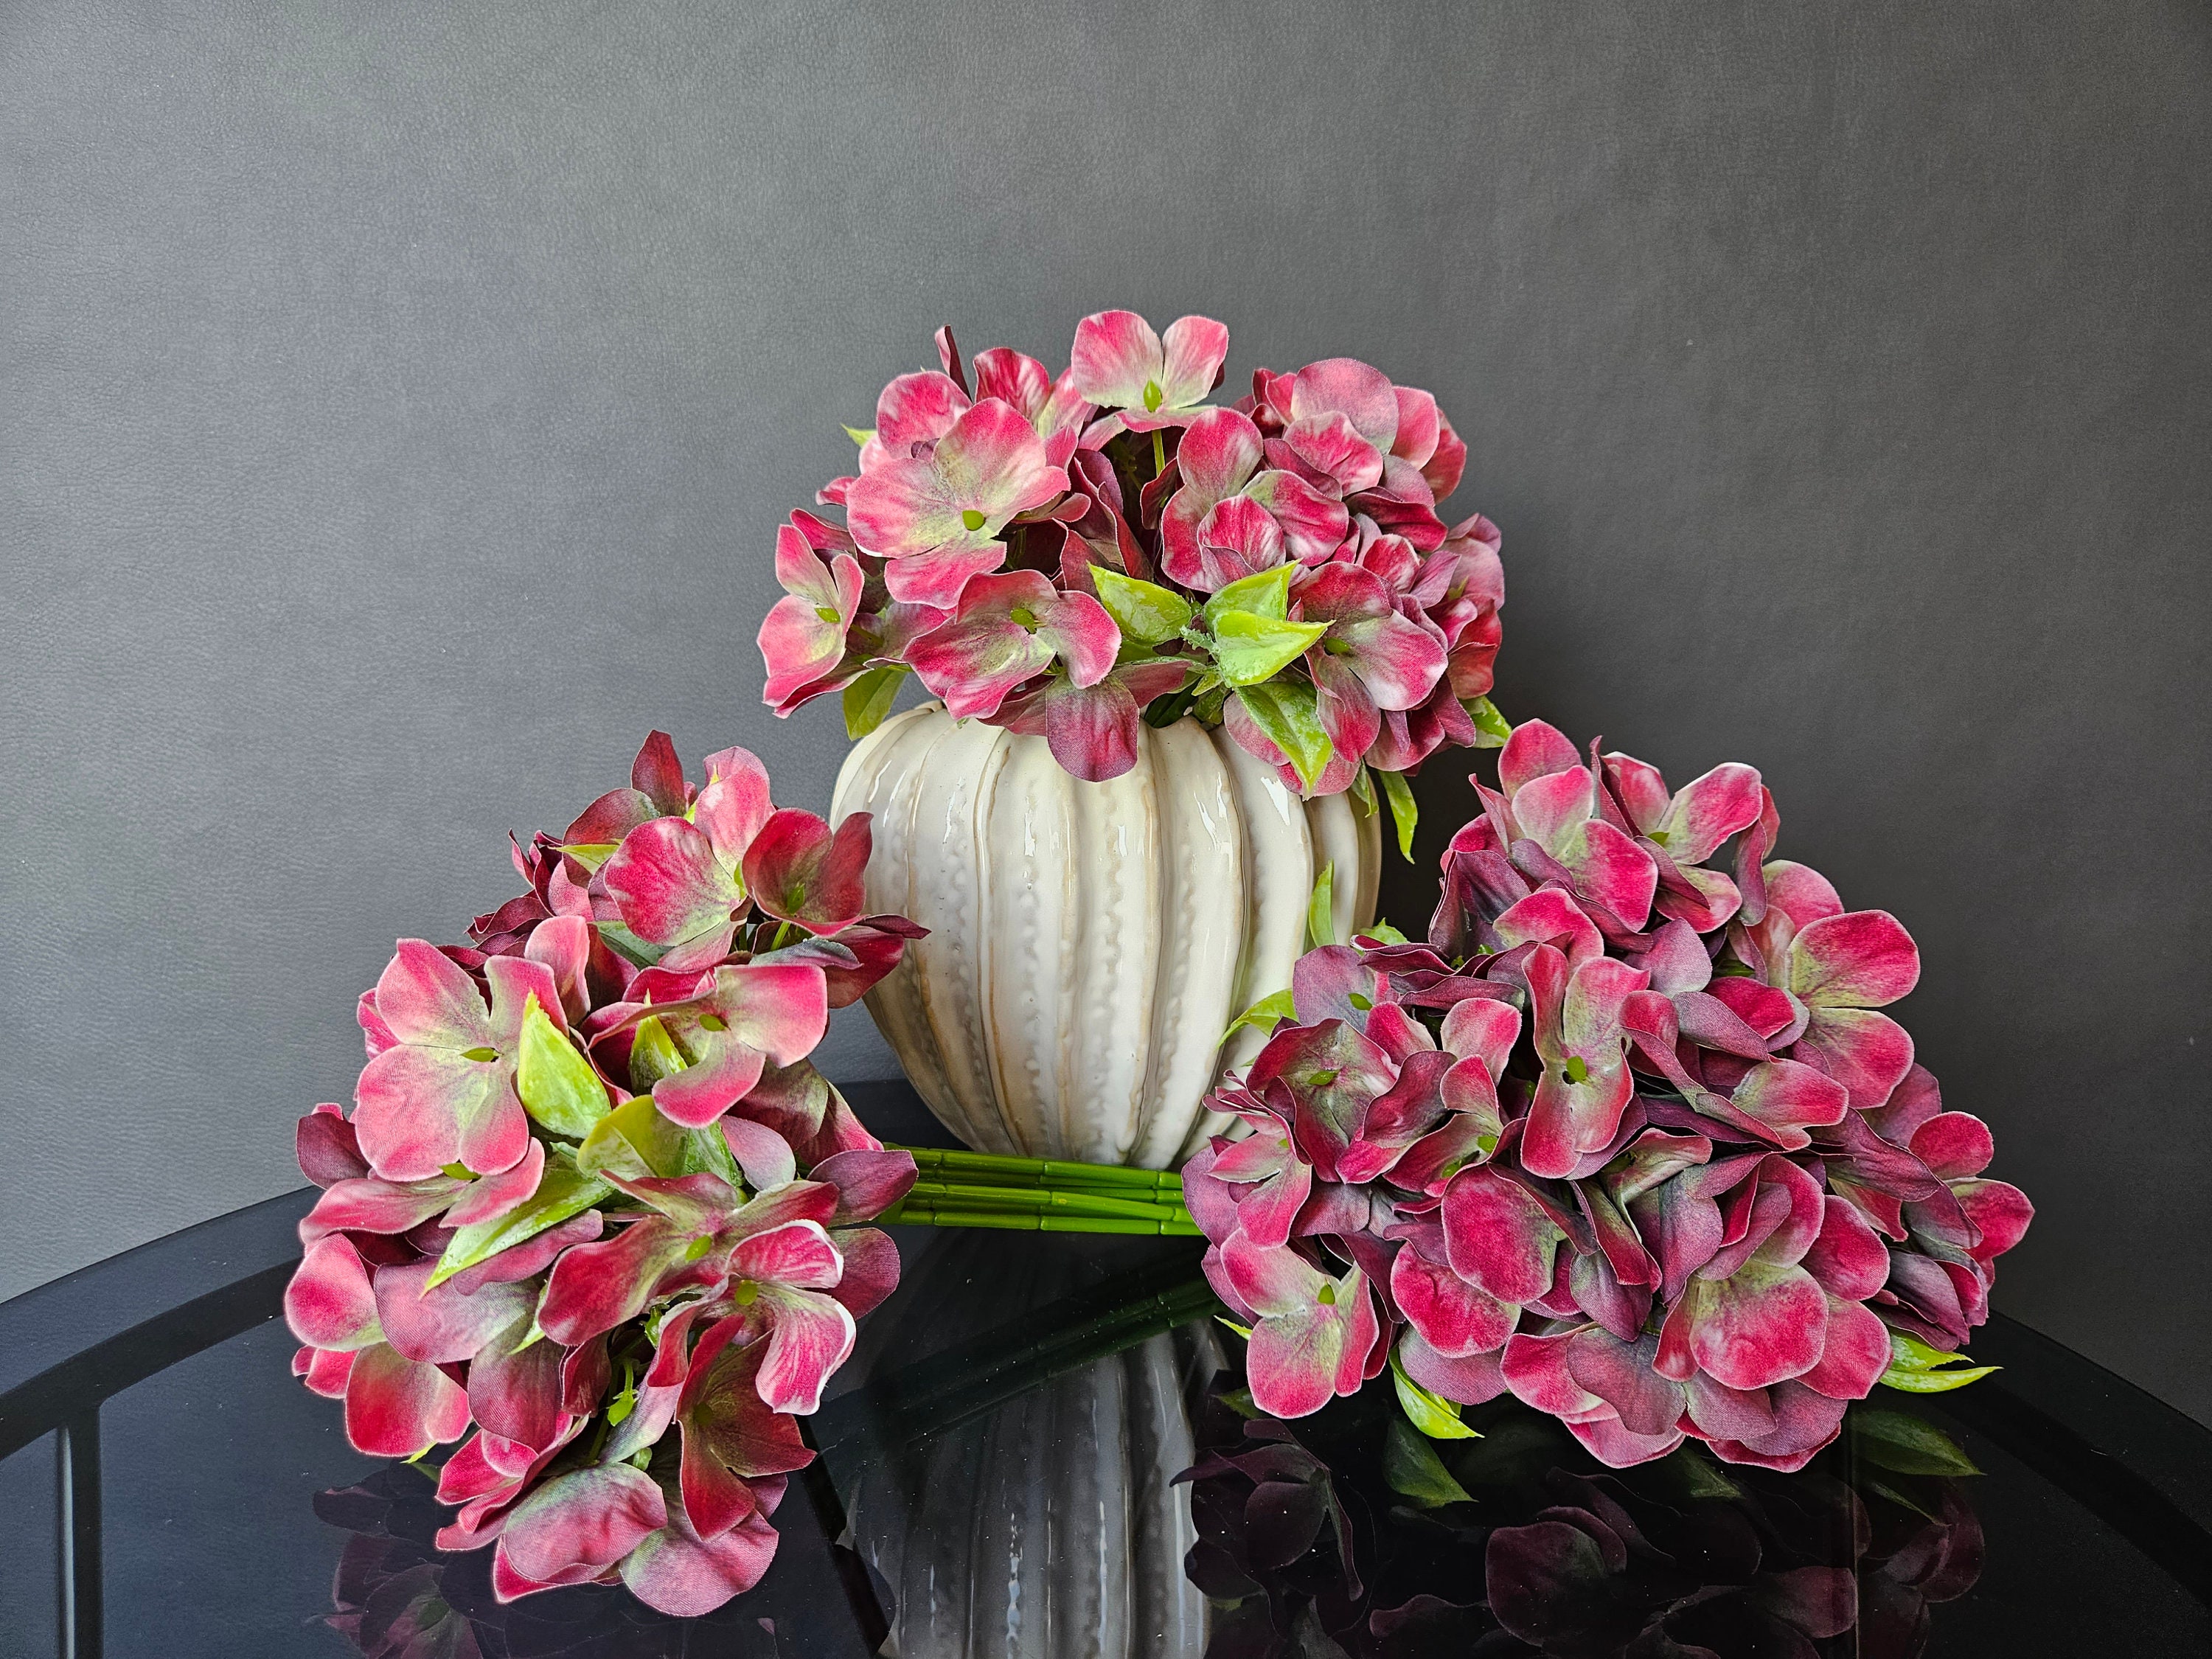 Dried Hydrangea Bouquet, Chic Home Decor, Dried Hydrangea Flowers, Make  Great Dried Arrangements, Boho Style Flower 